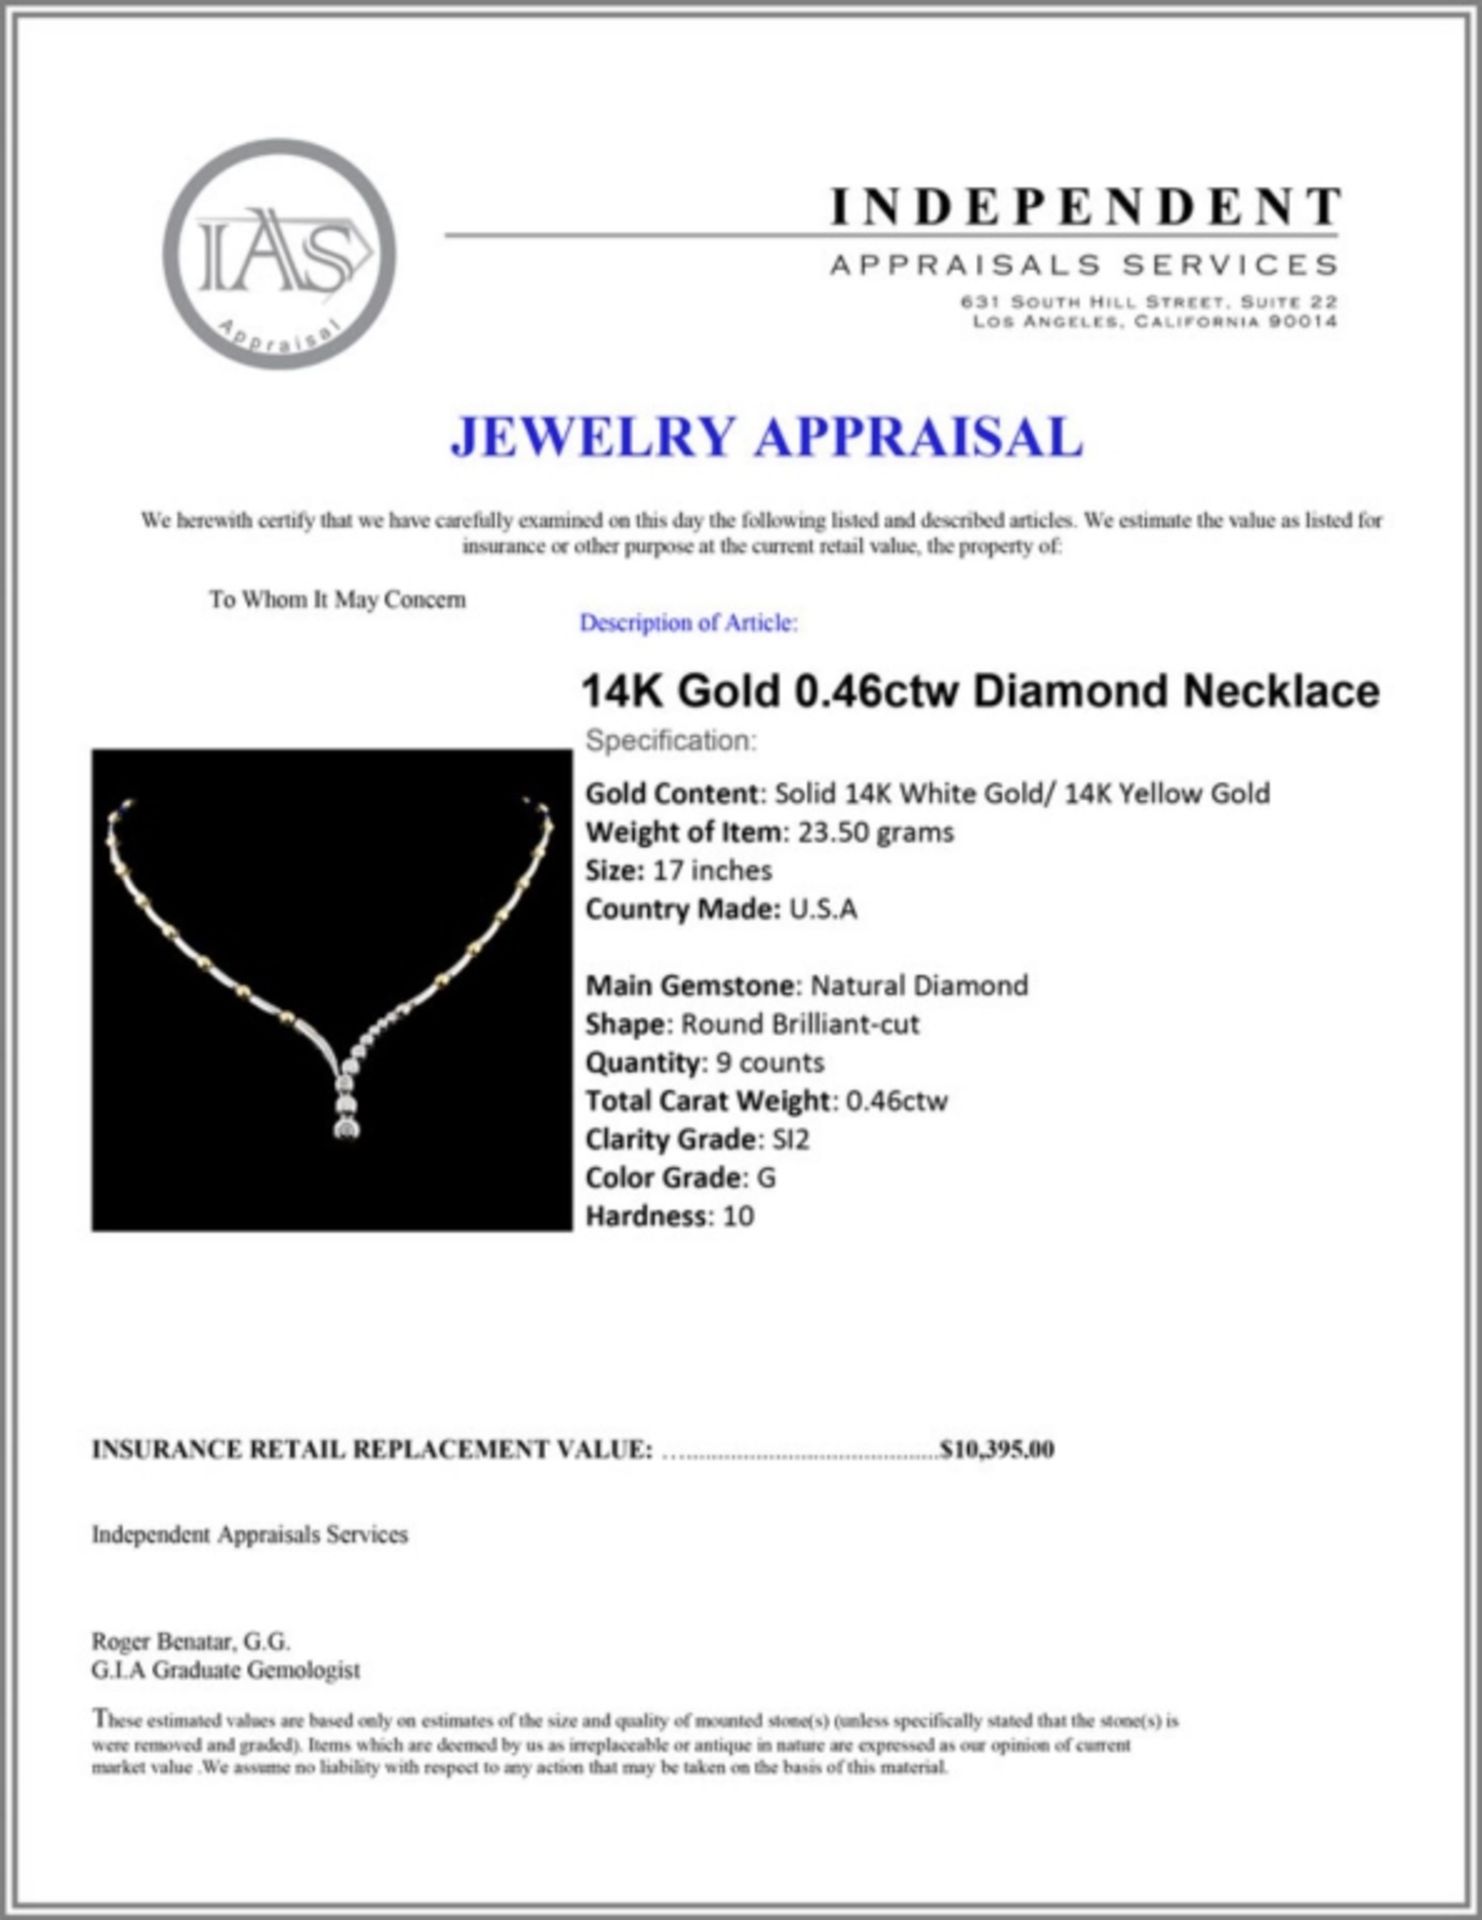 14K Gold 0.46ctw Diamond Necklace - Image 4 of 4